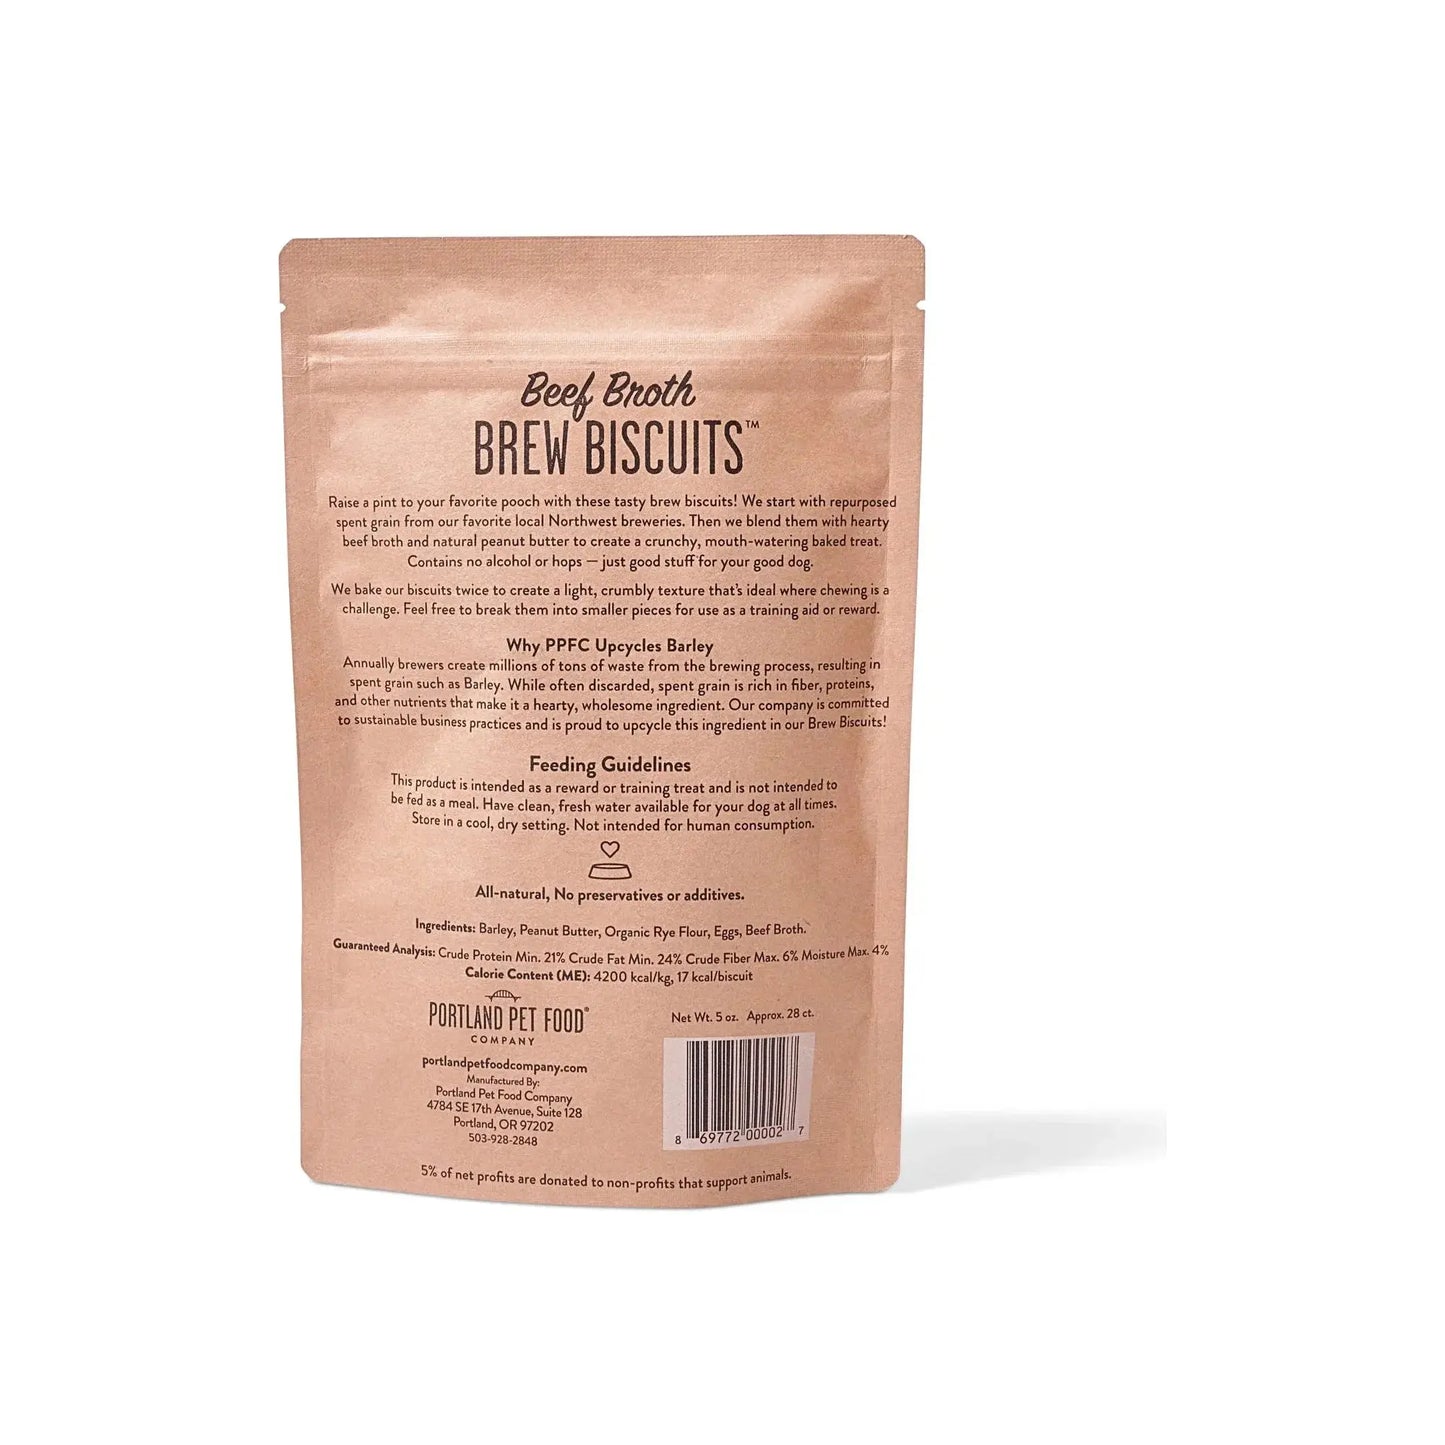 Portland Pet Food Company Beef Broth Brew Biscuits Dog Treats Portland Pet Food